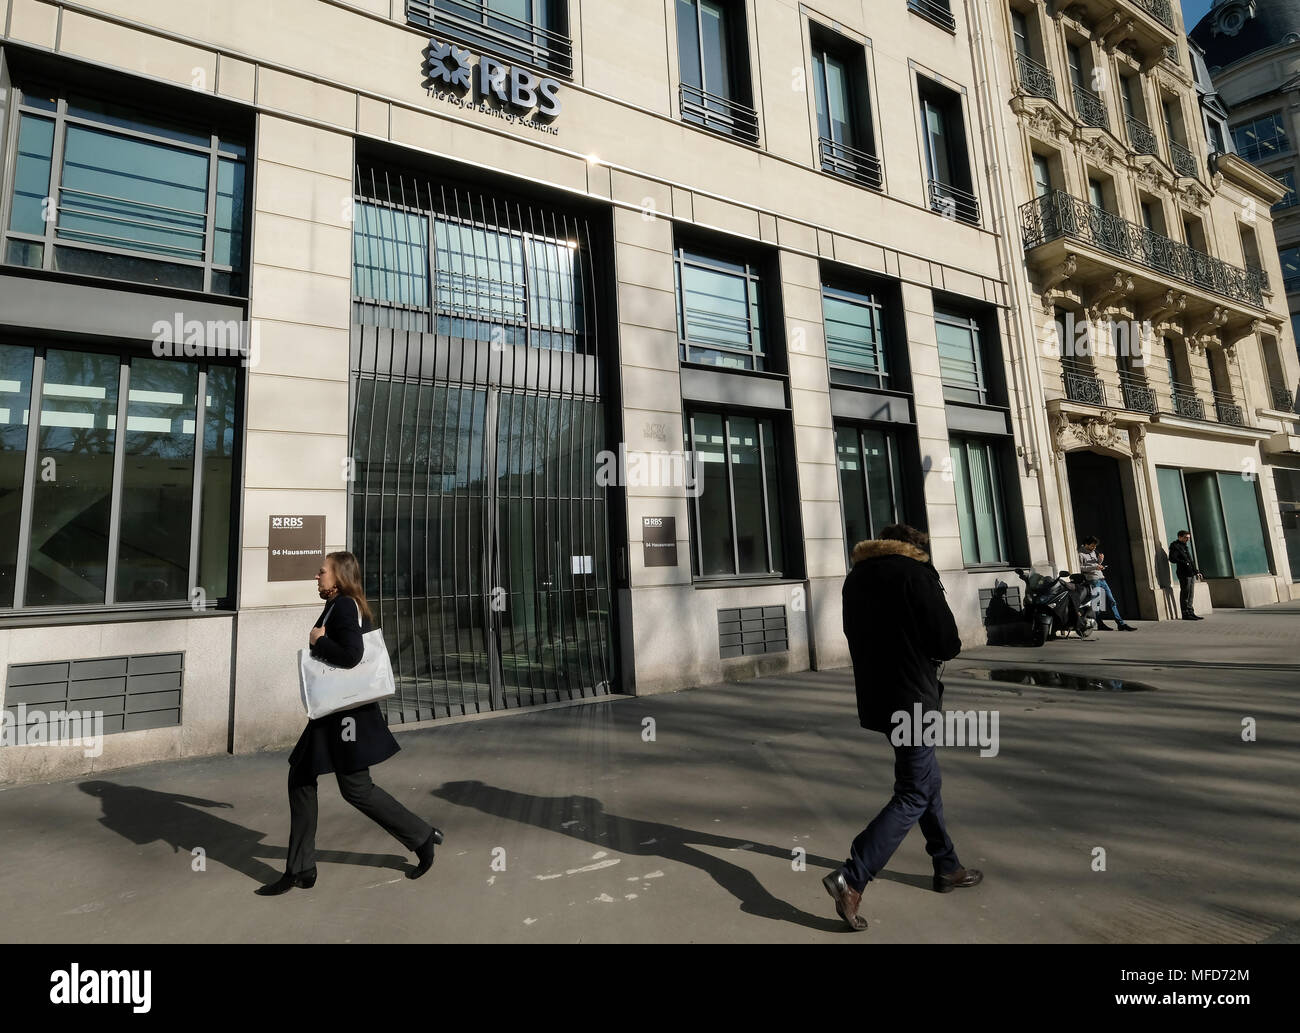 Die Royal Bank of Scotland Niederlassung Boulevard Haussmann, Paris. Stockfoto